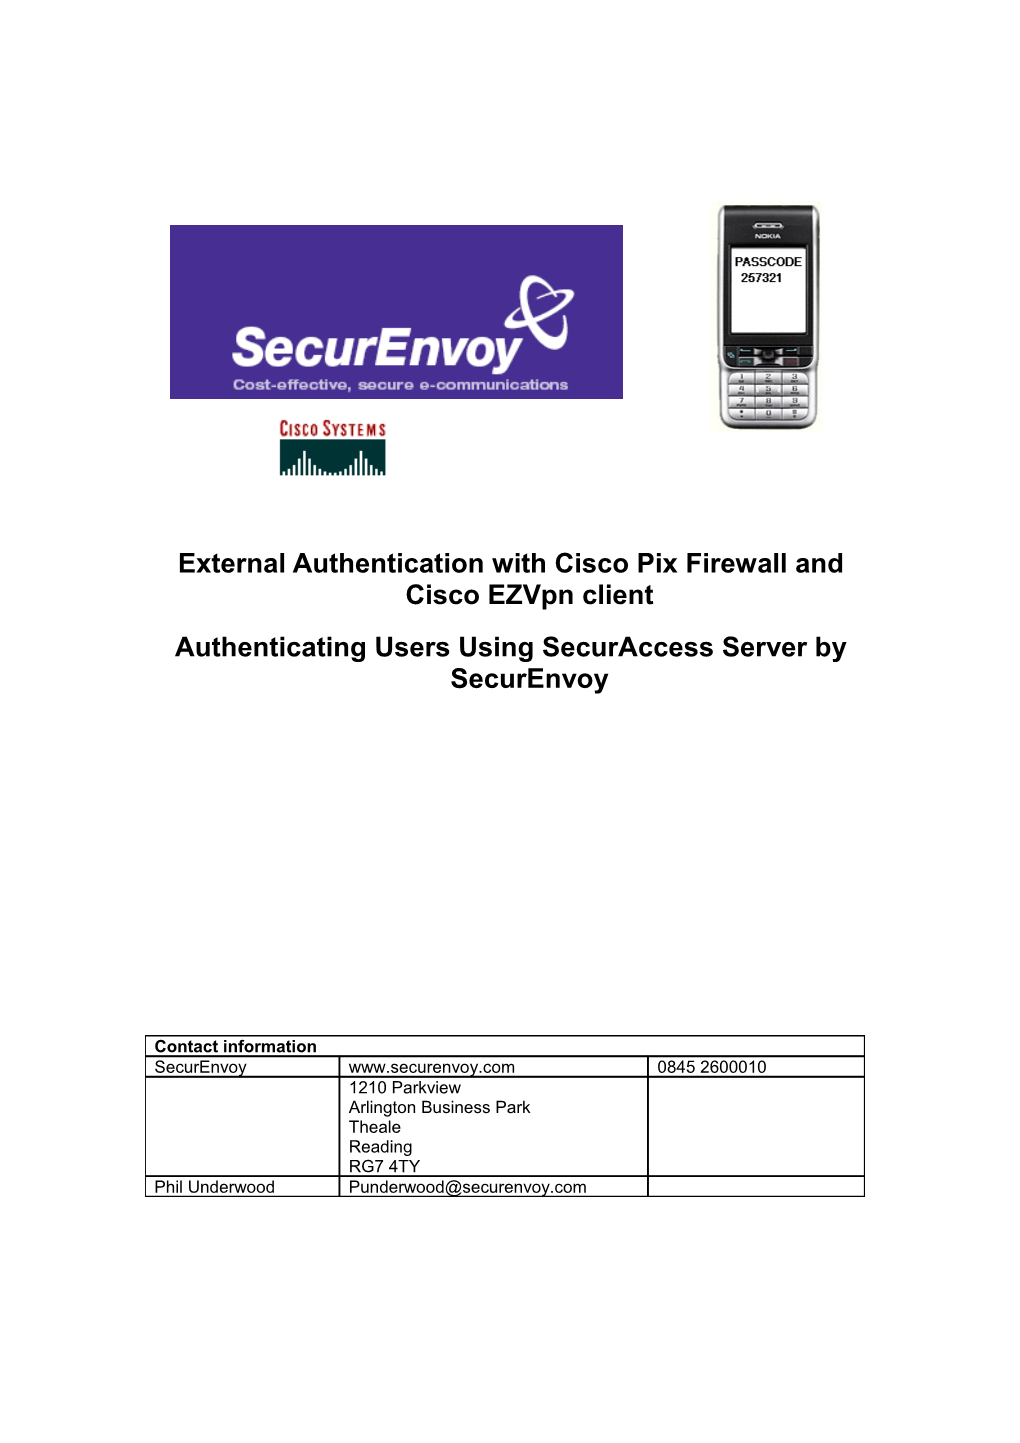 External Authentication with Cisco Pix Firewall and Cisco Ezvpn Client